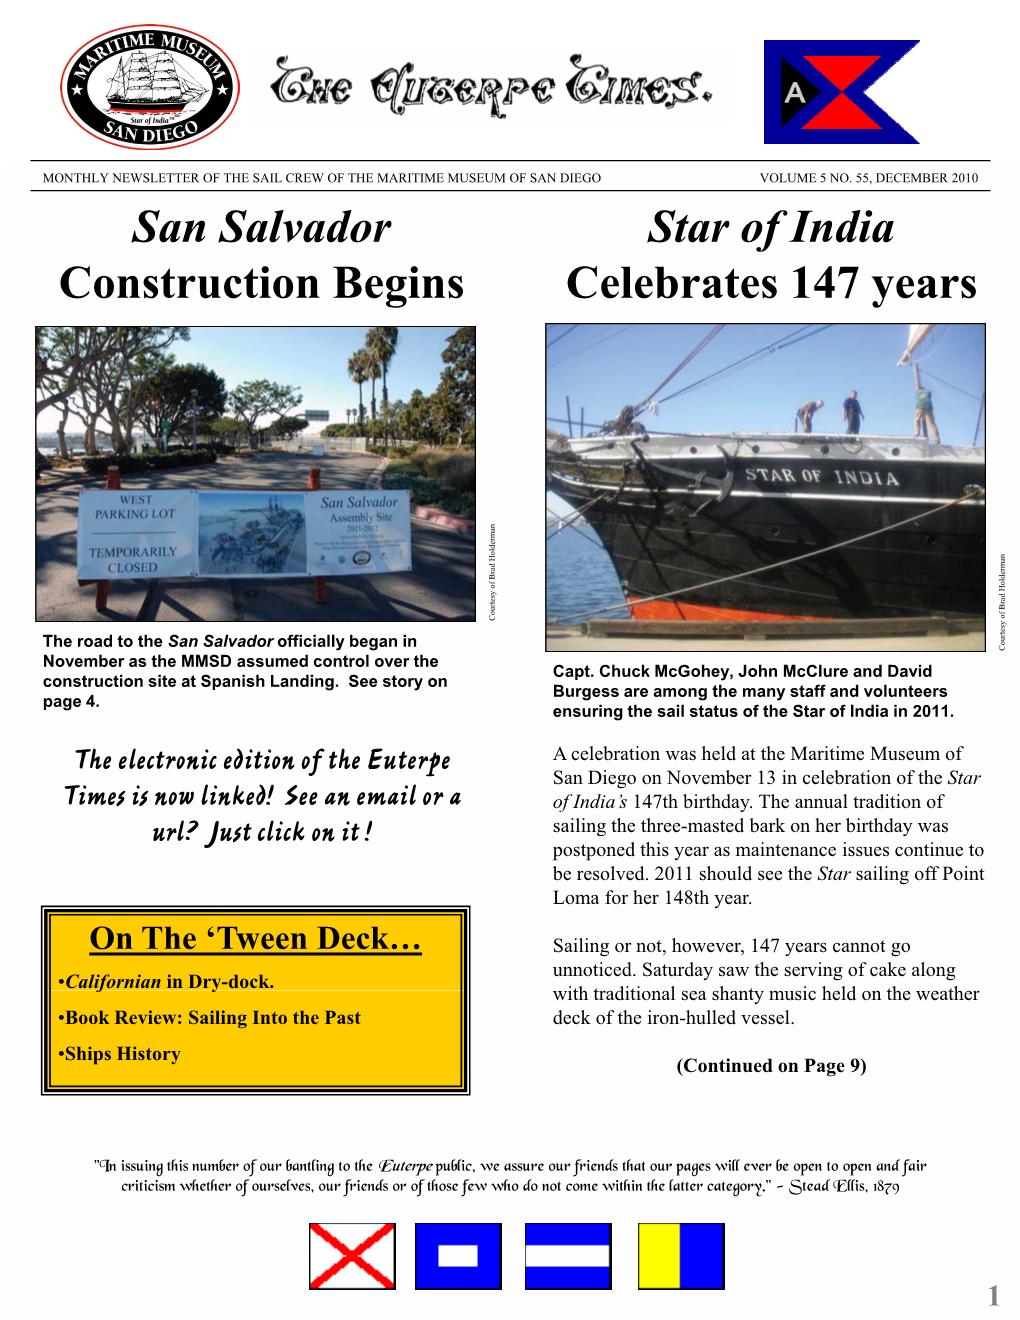 Star of India Celebrates 147 Years San Salvador Construction Begins